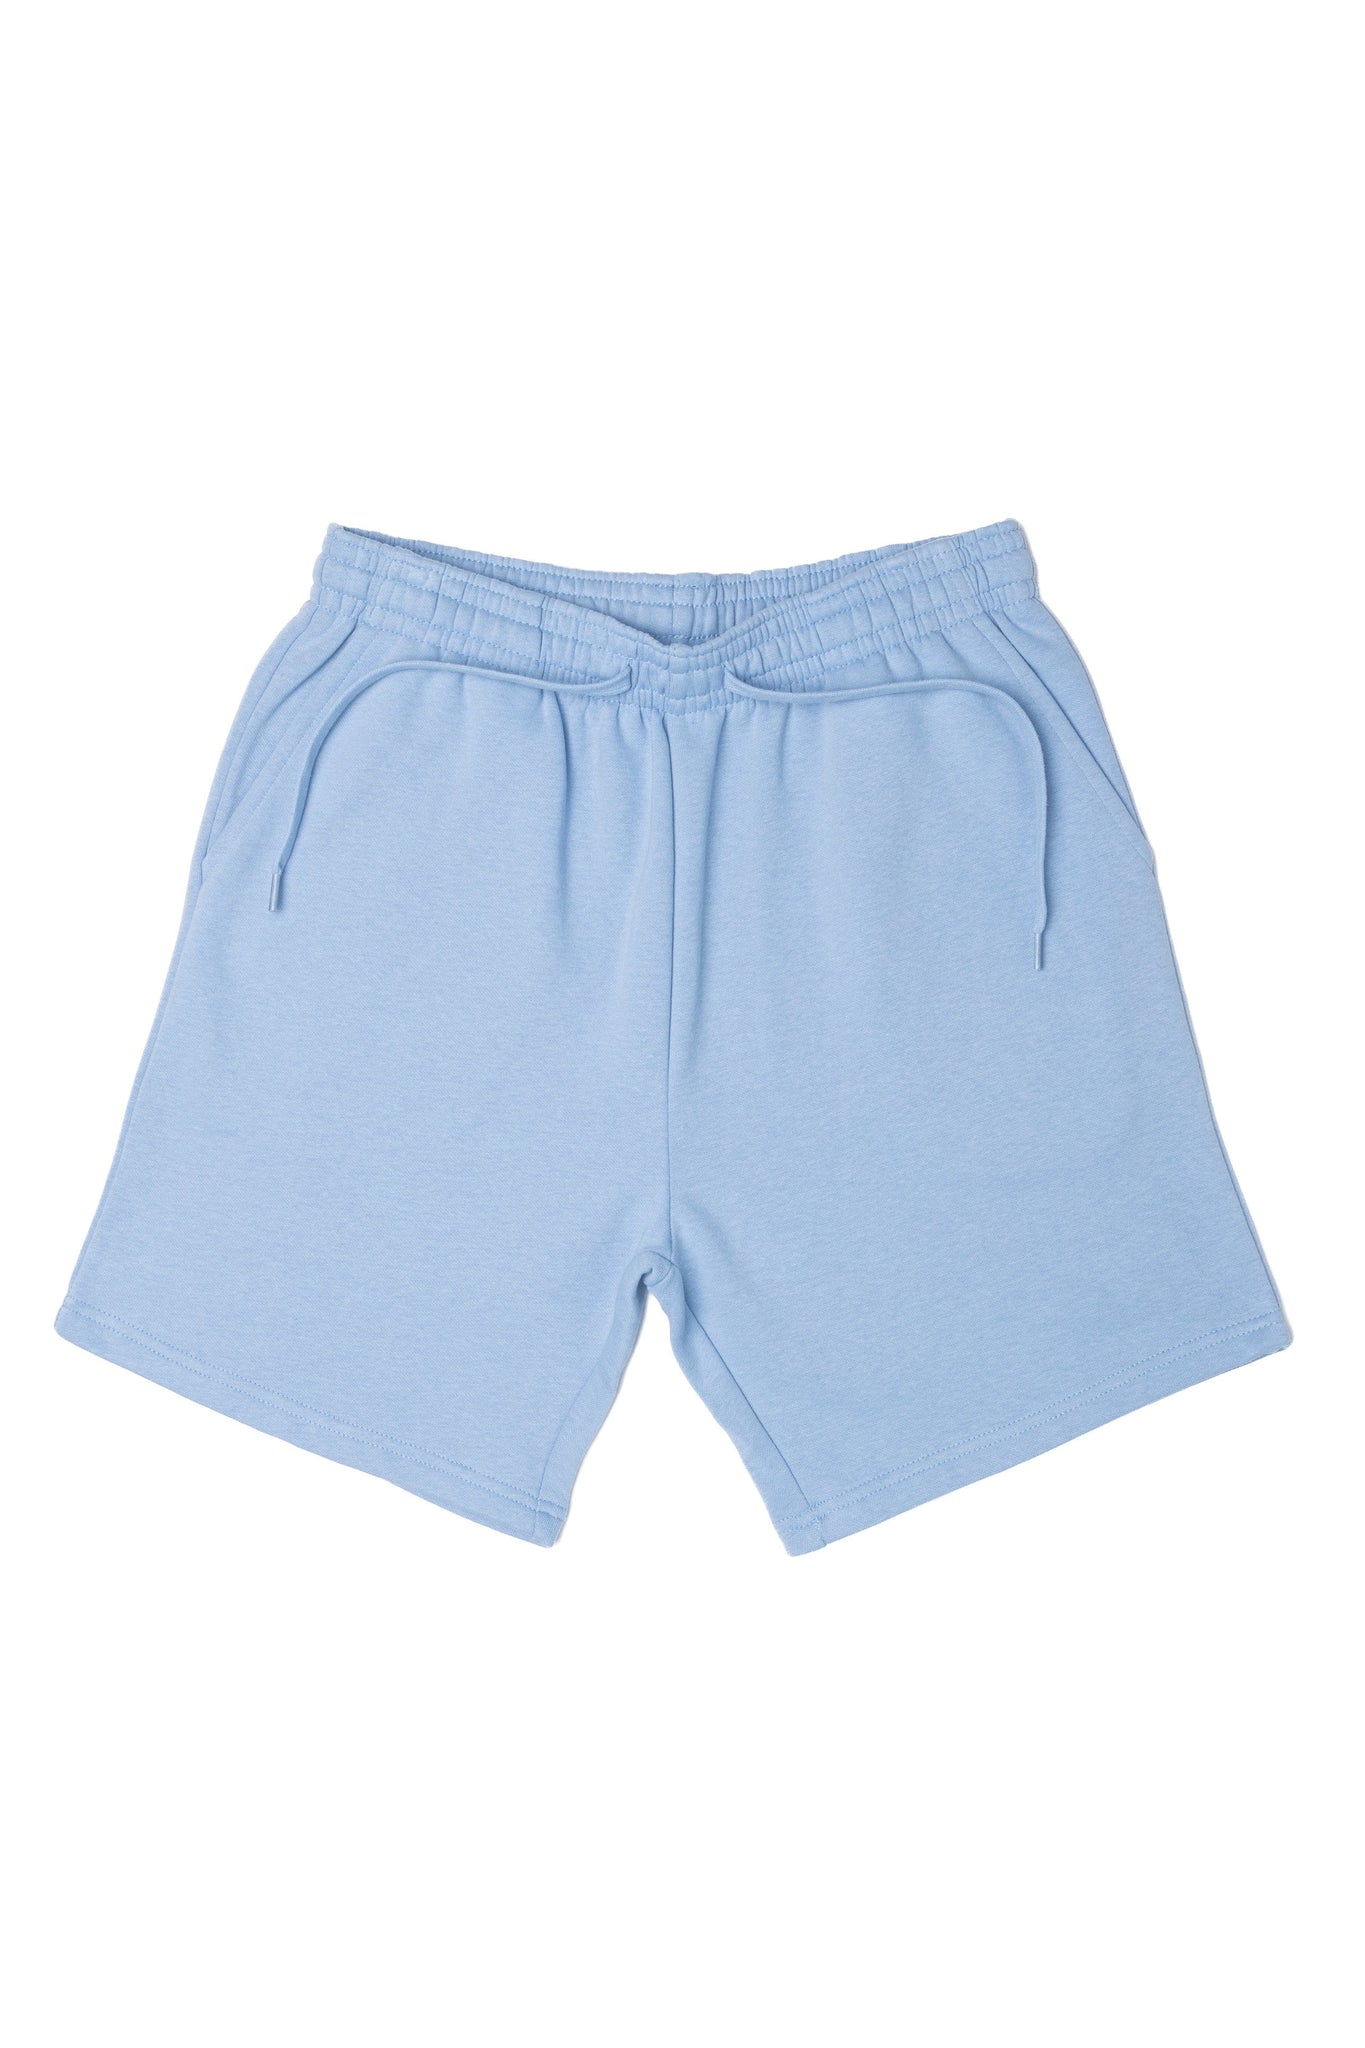 HERO - 6020 7’ Sweatshorts - Sky Blue Shorts